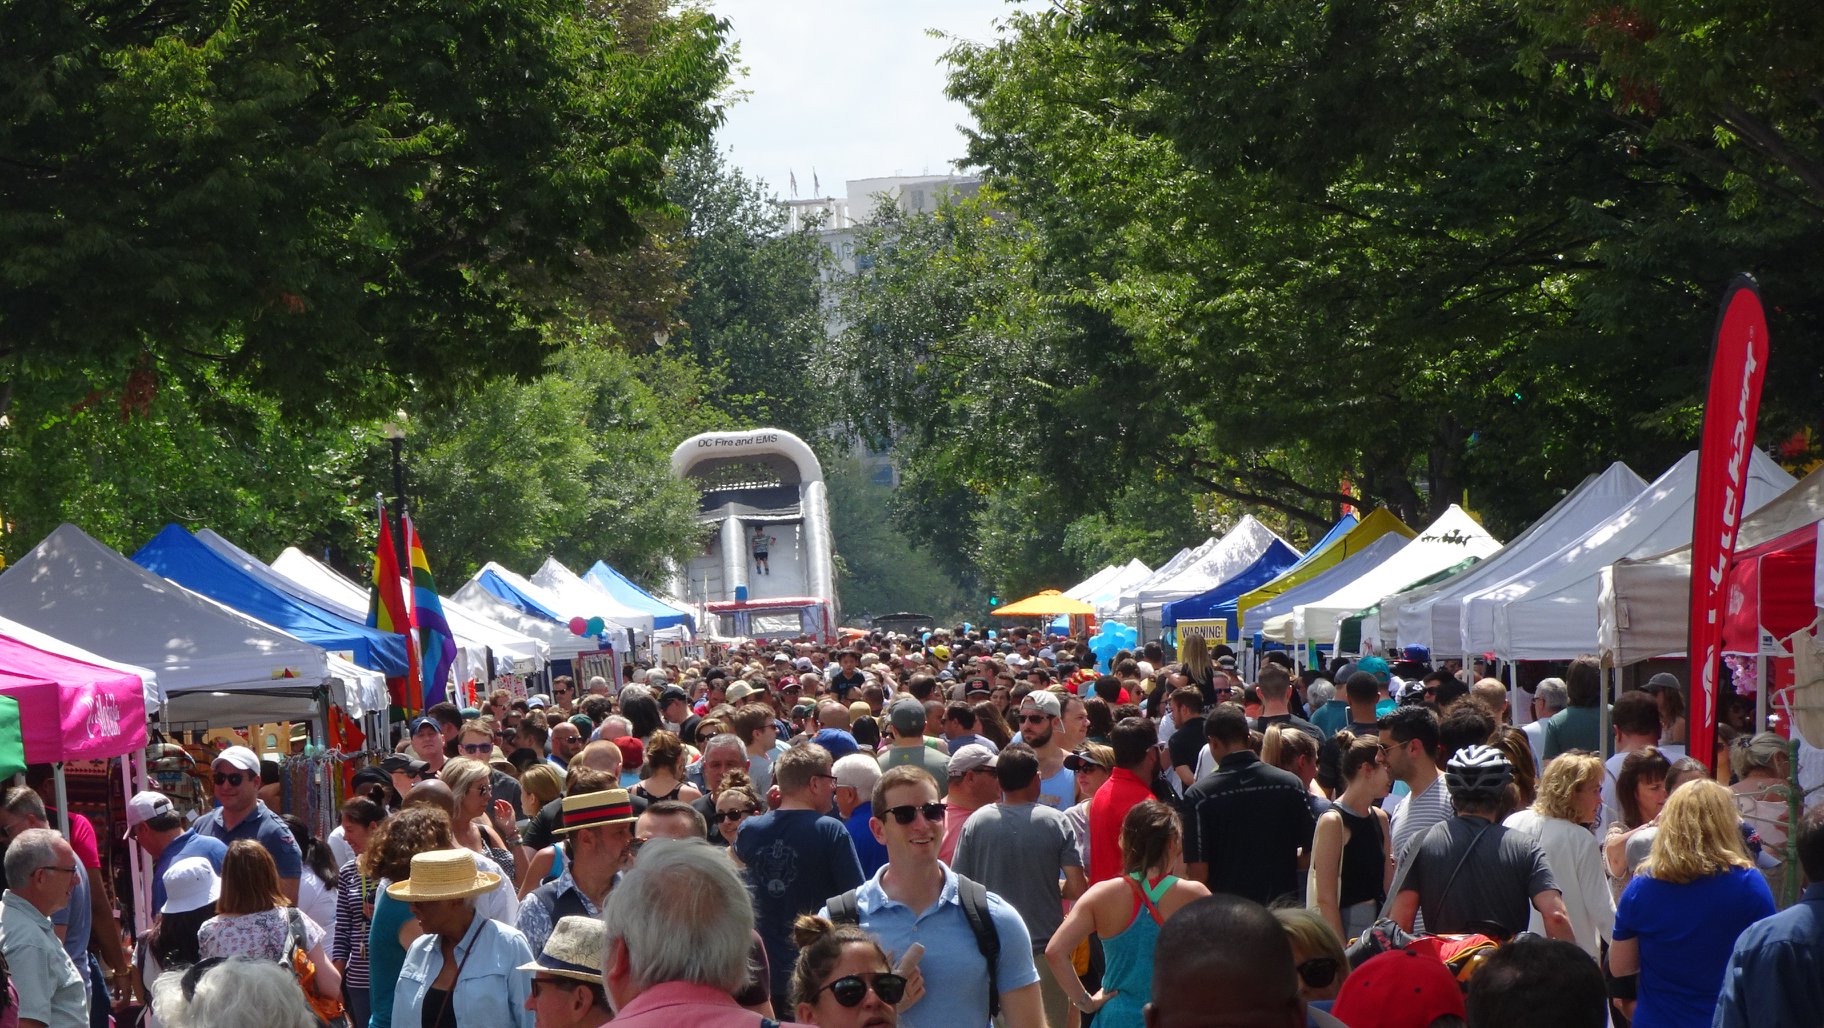 festival, crowd